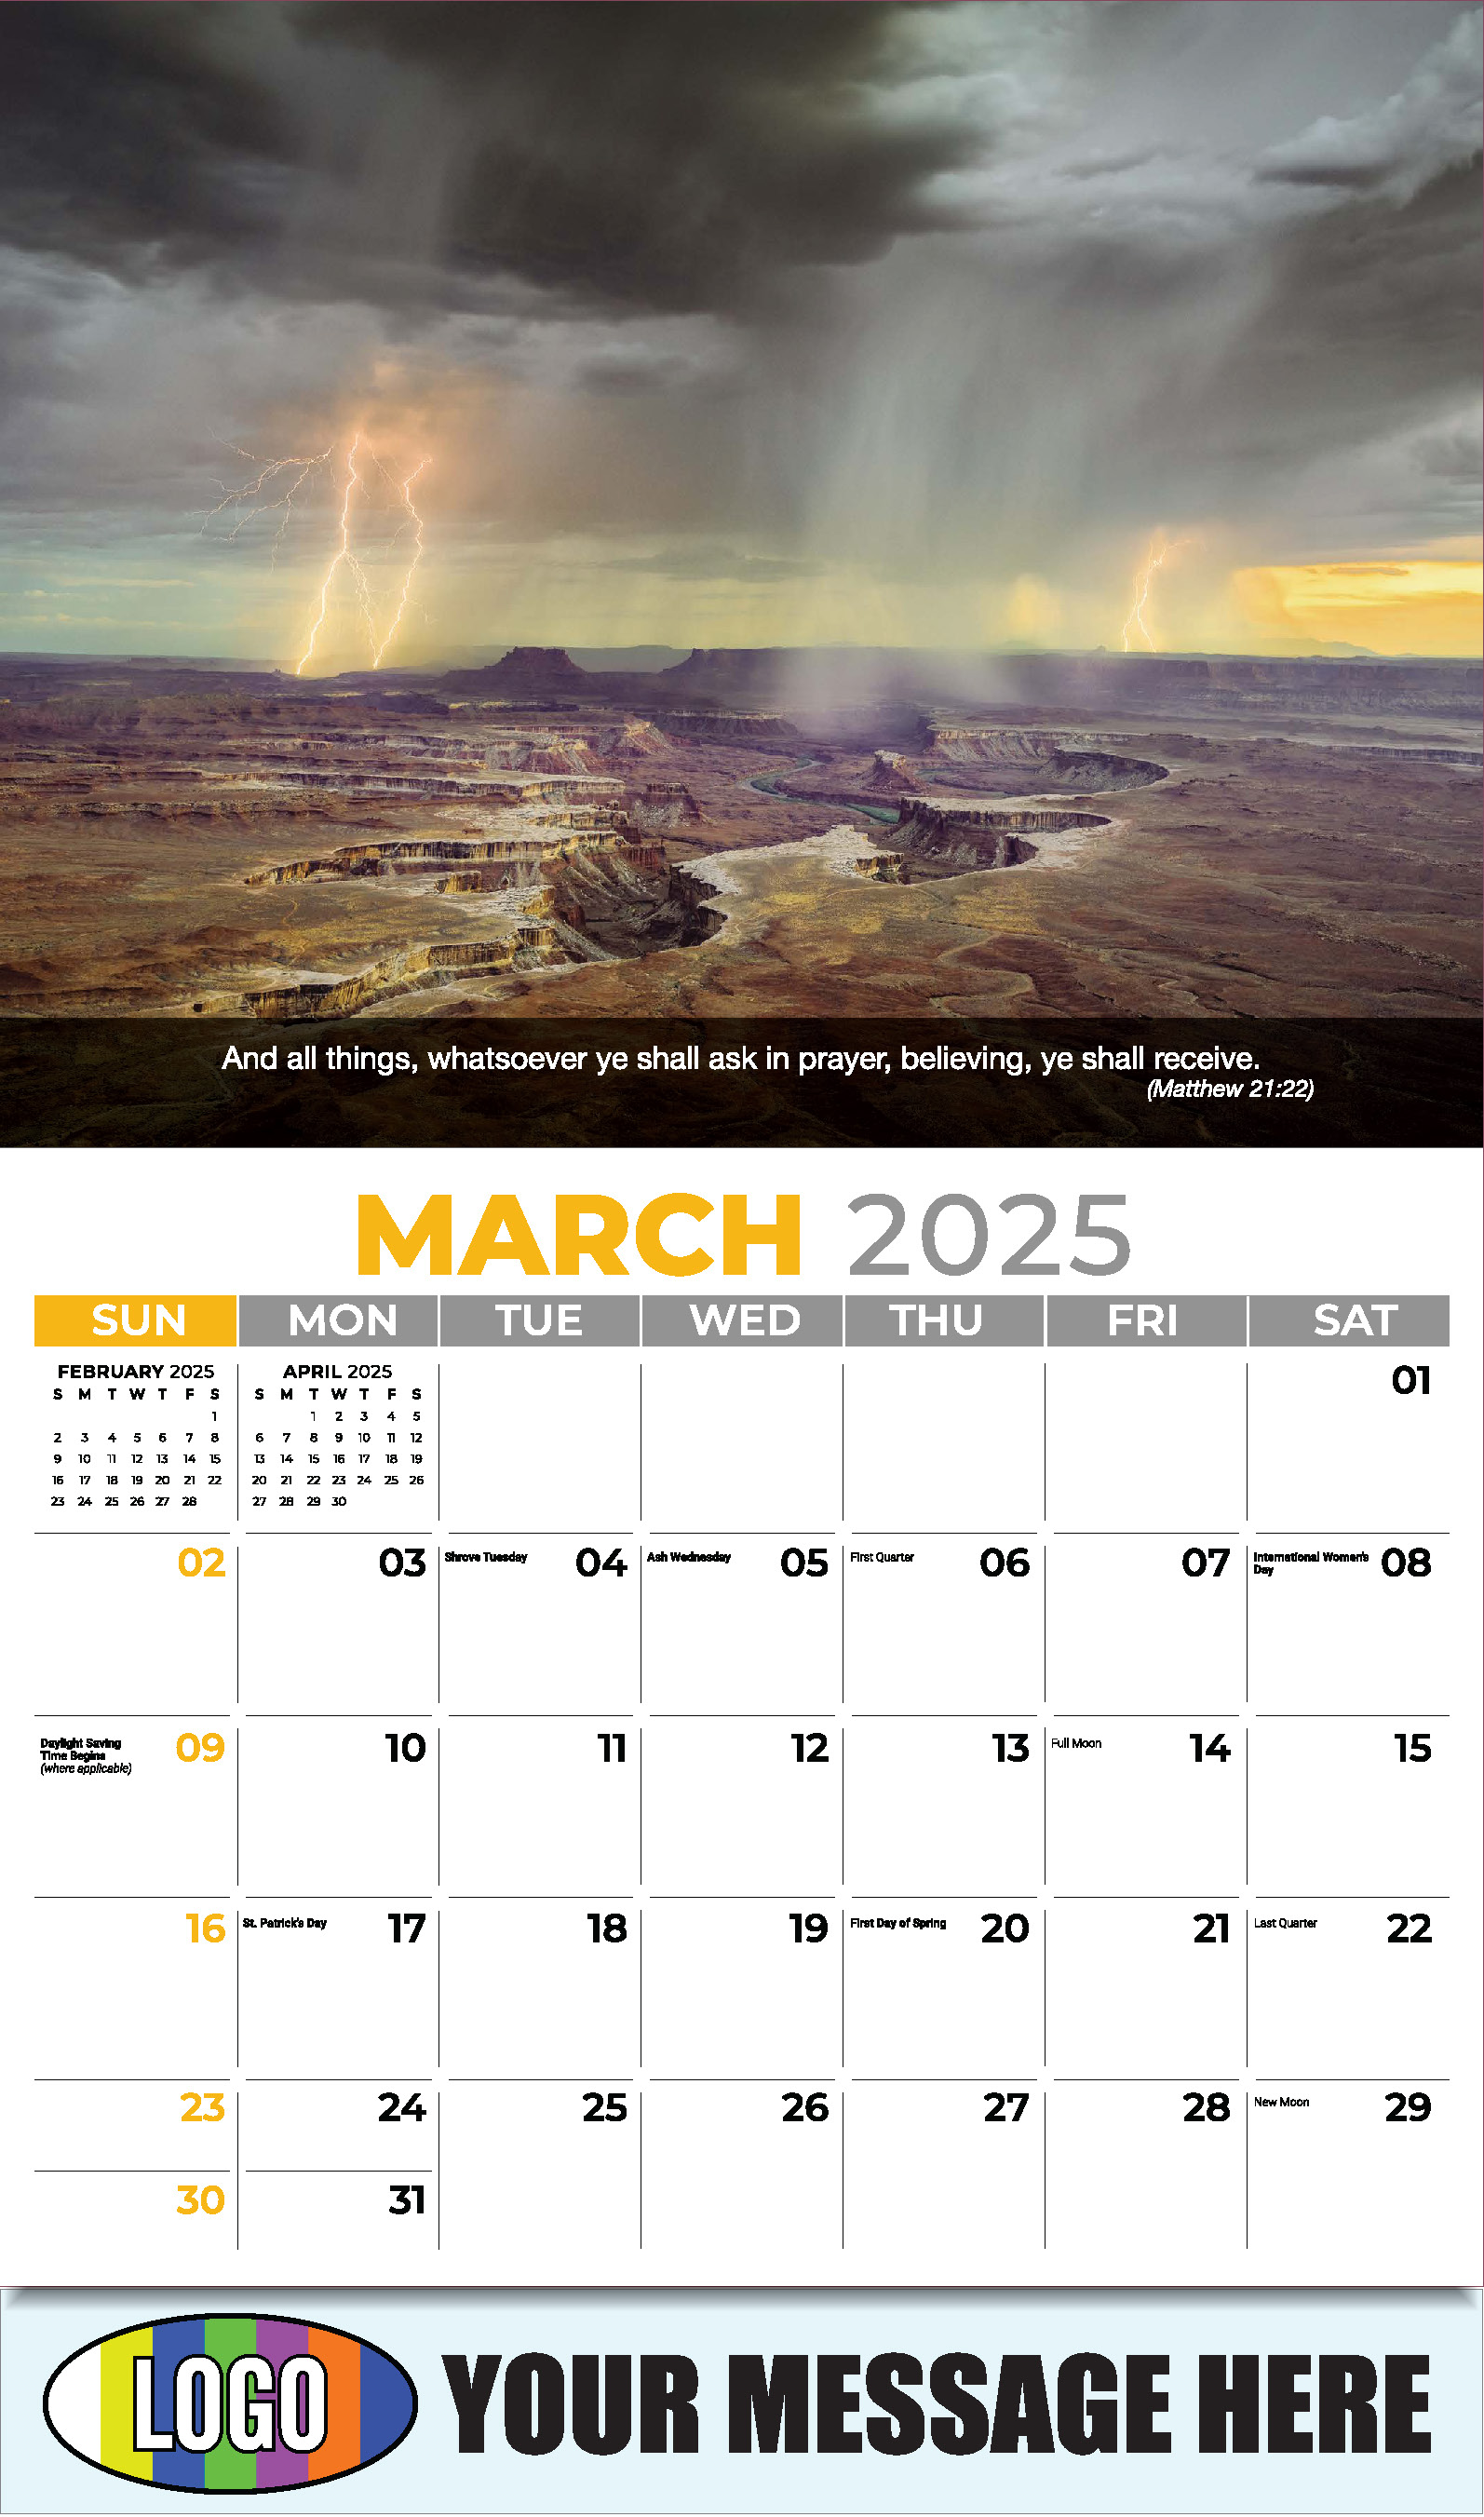 Faith Passages 2025 Christian Business Advertising Calendar - March